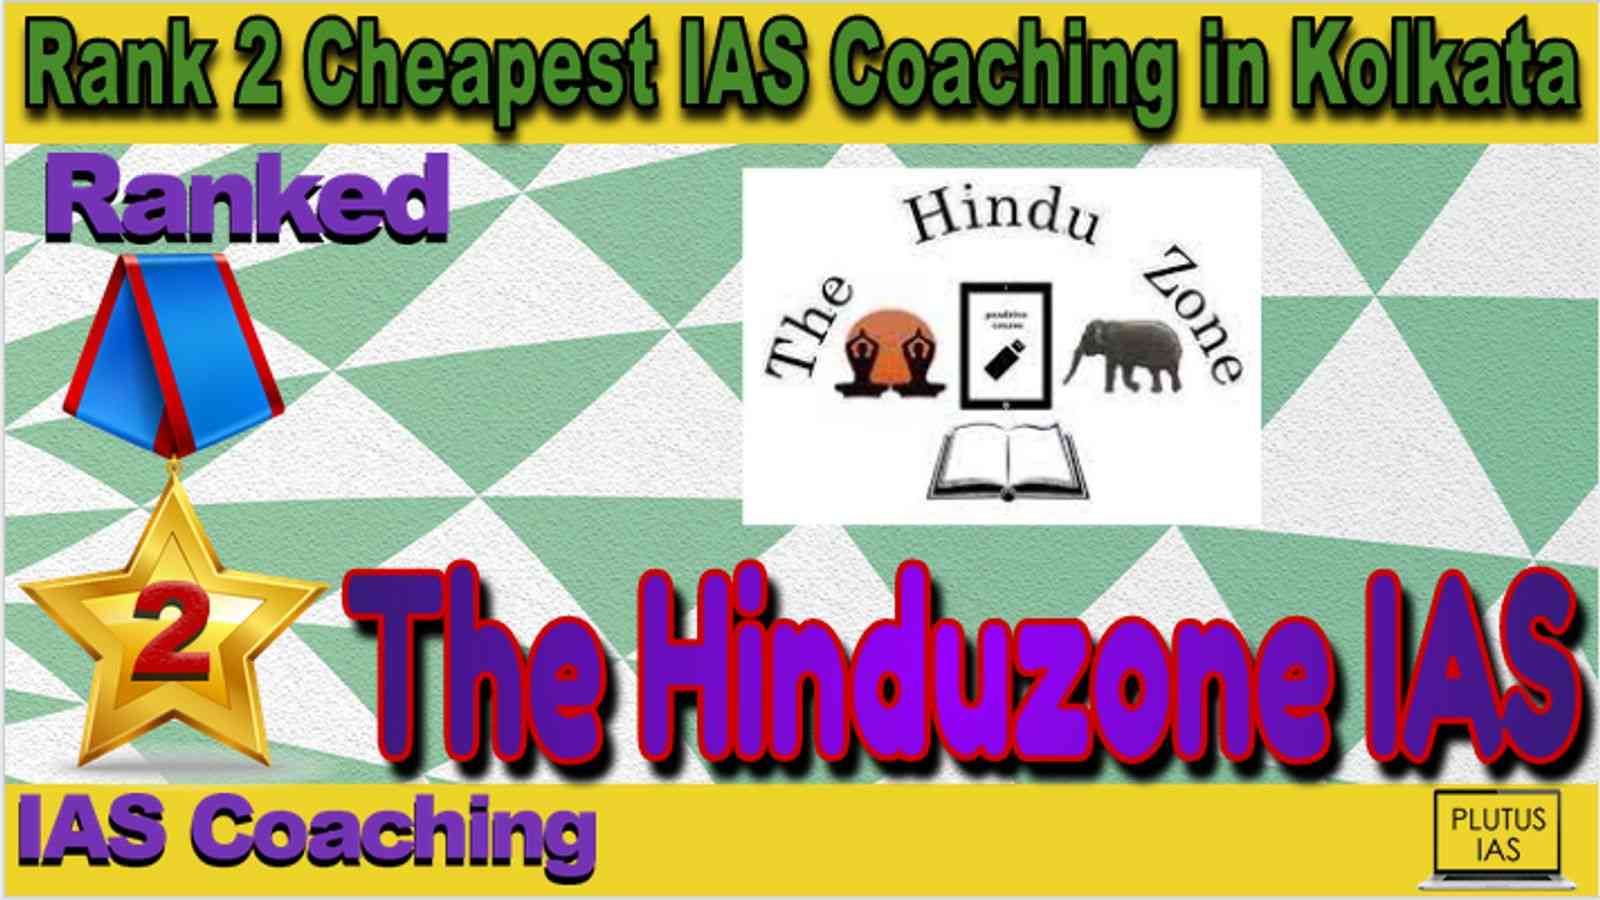 Rank 2 Cheapest IAS Coaching in Kolkata